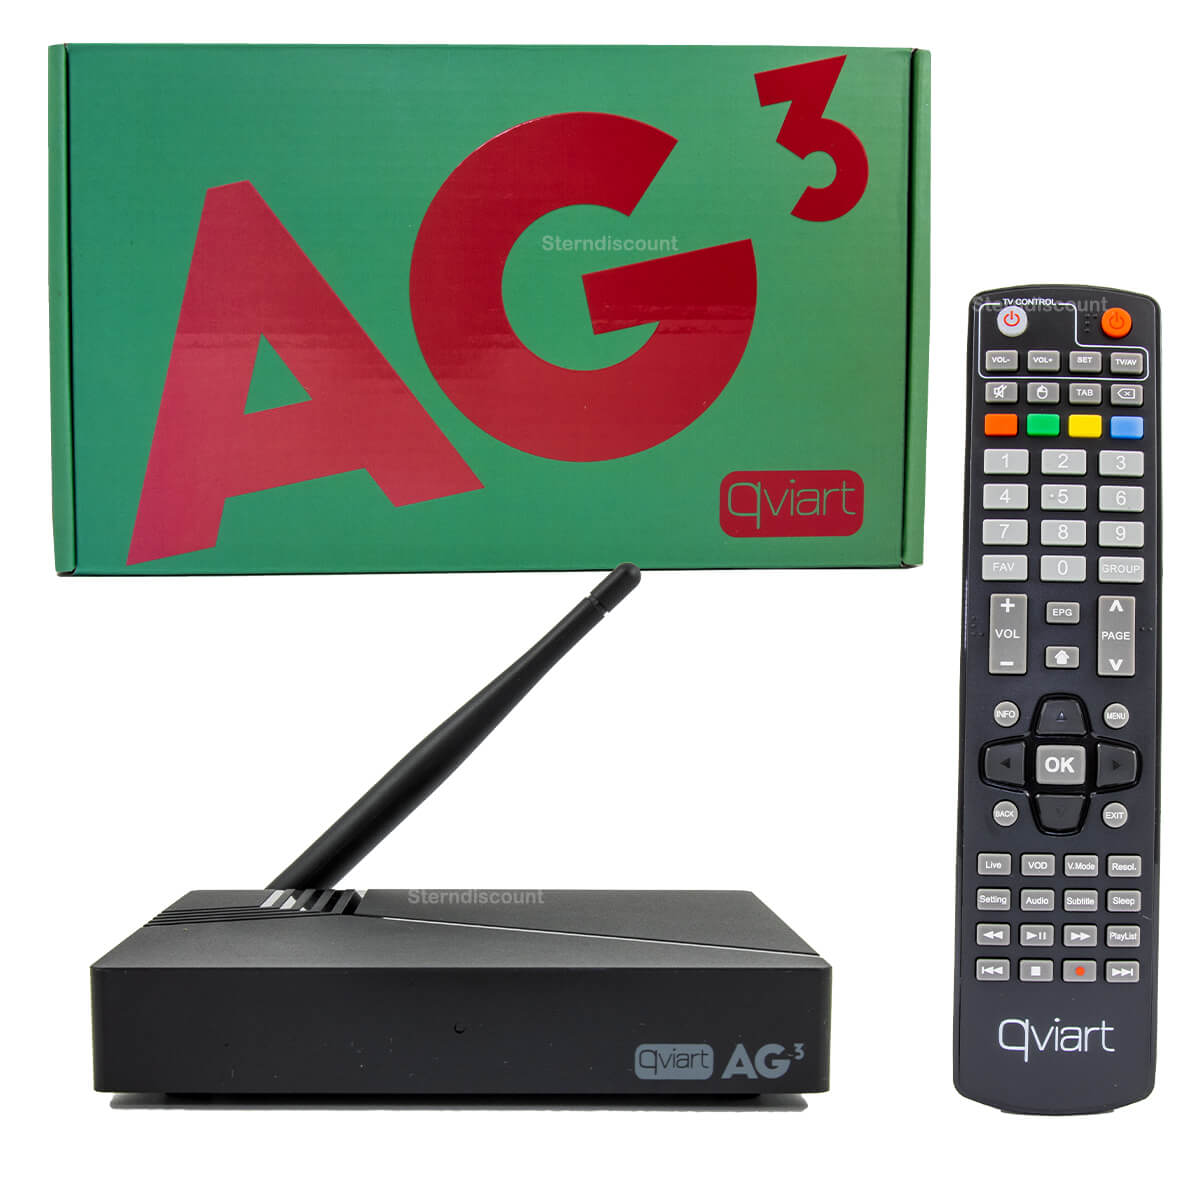 Qviart-AG3-Android-9-4K-UHD-IPTV-Media-Box